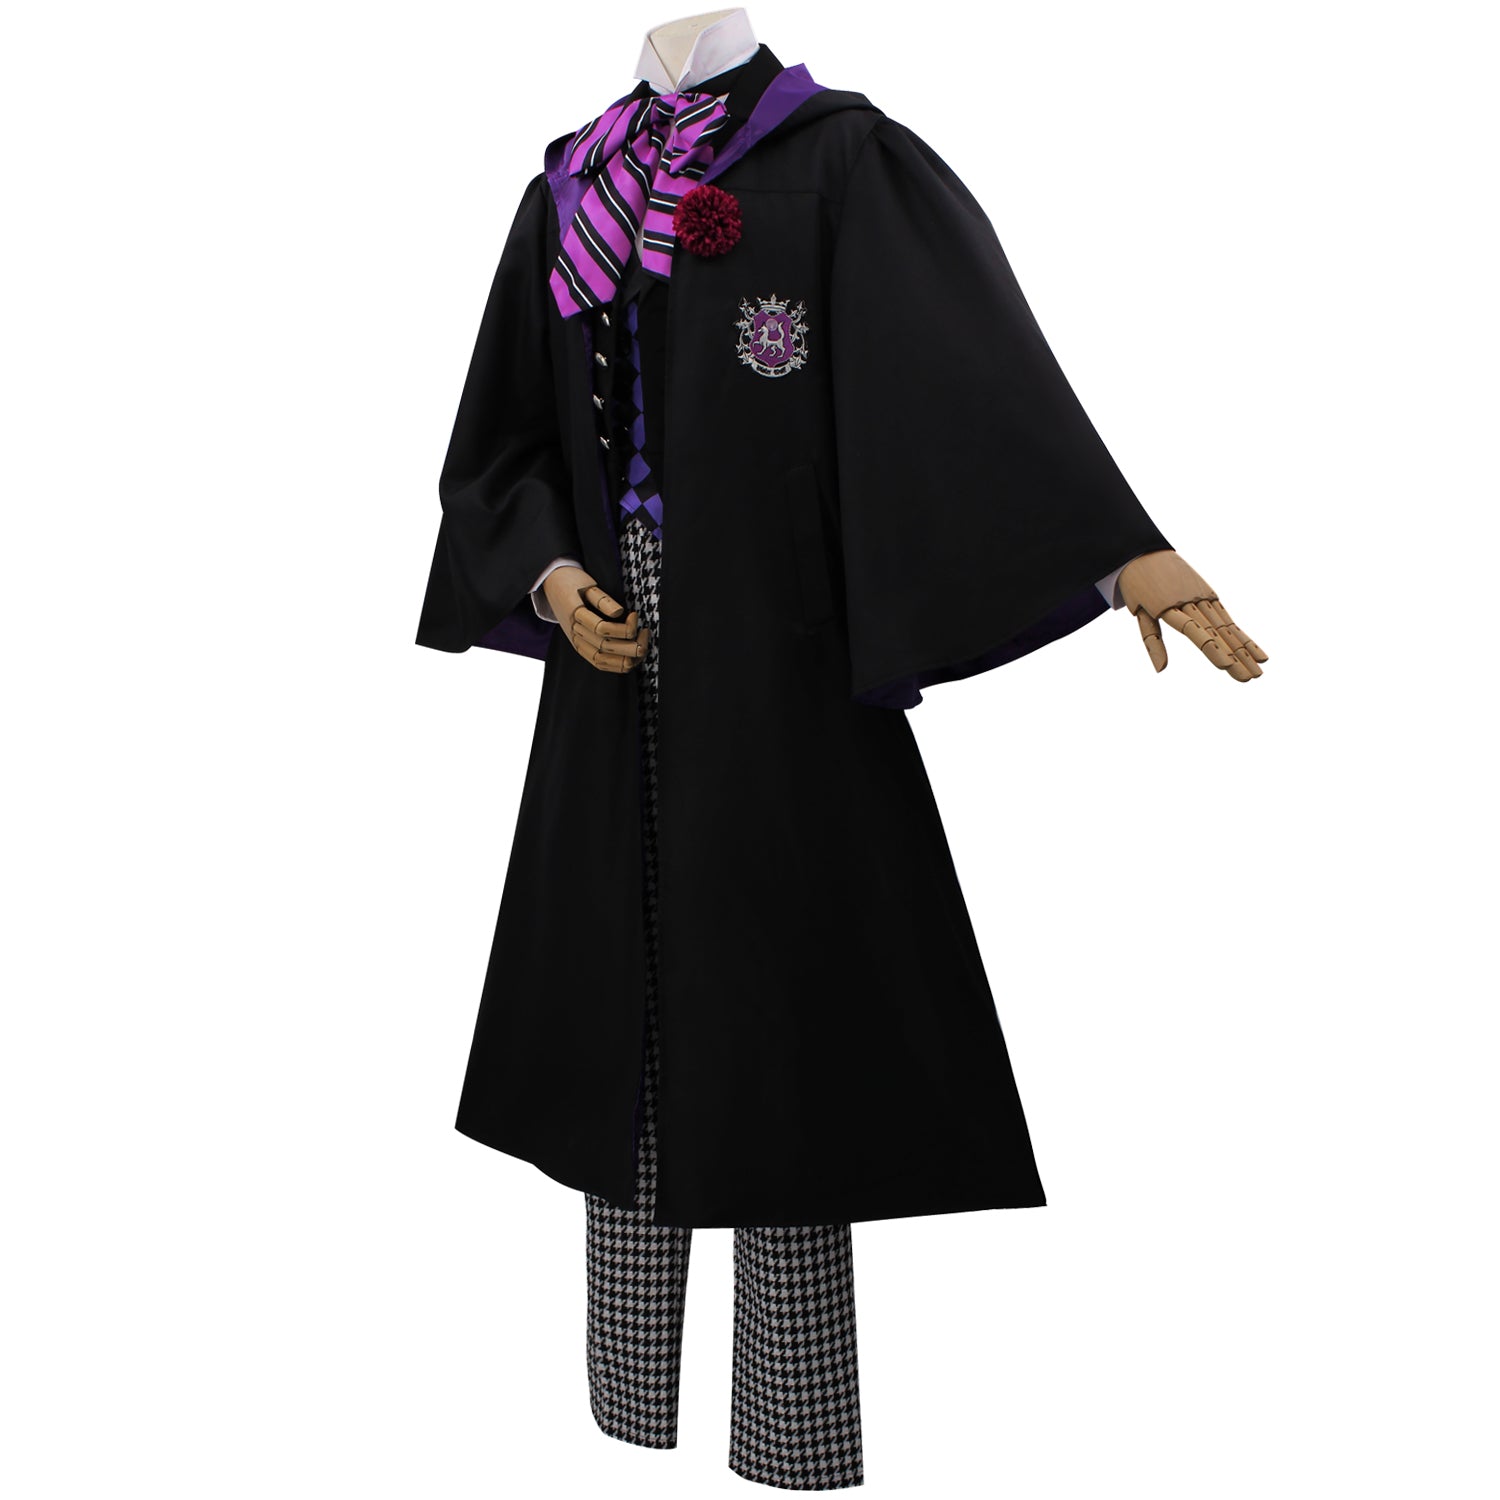 Black Butler Public School Arc Gregory Violet Cosplay Costume